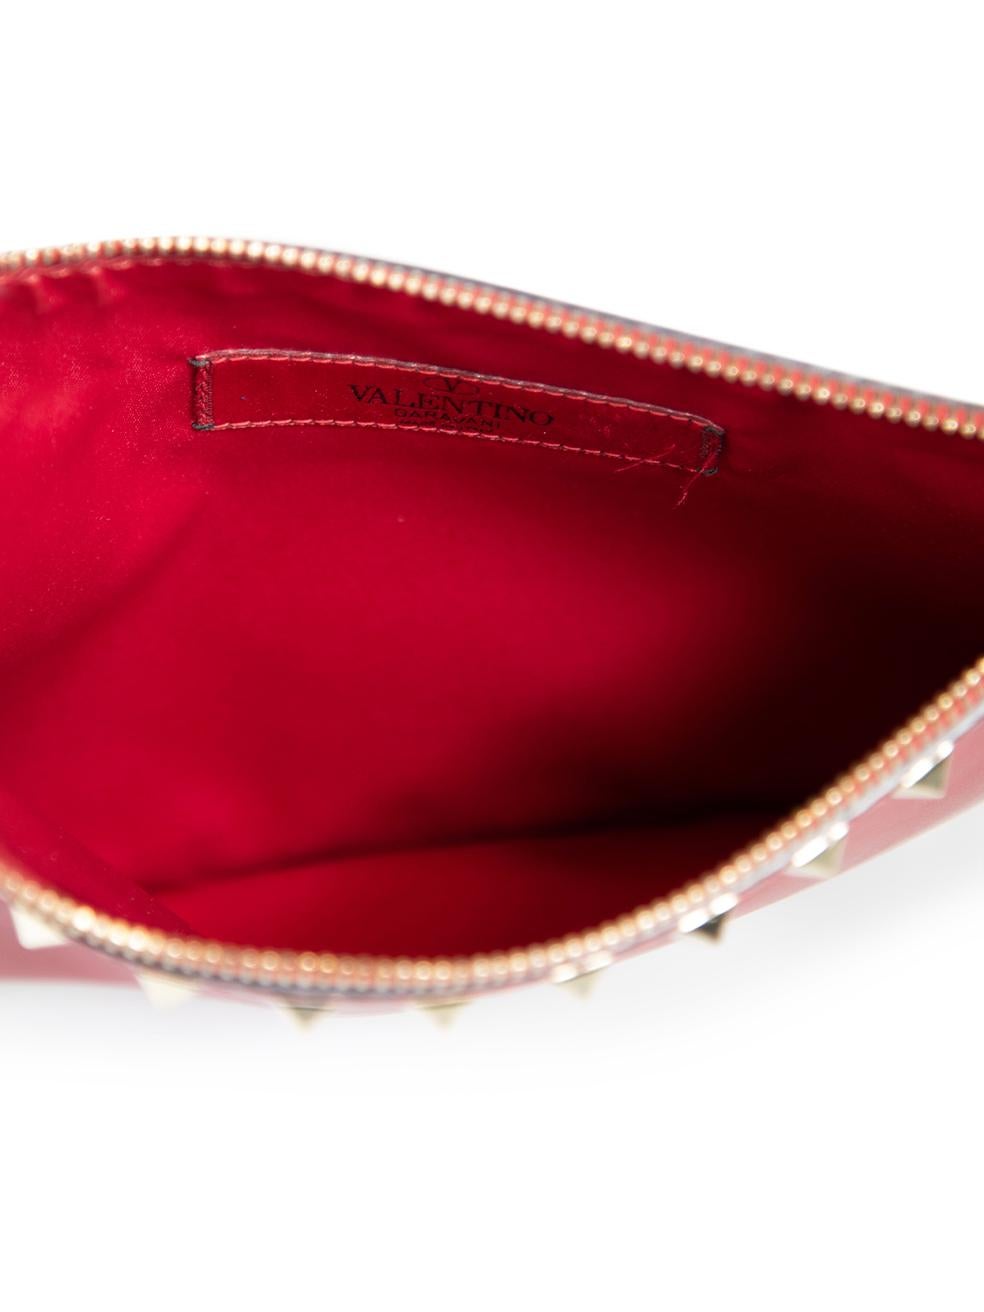 Valentino Garavani Red Leather Rockstud Clutch For Sale 1